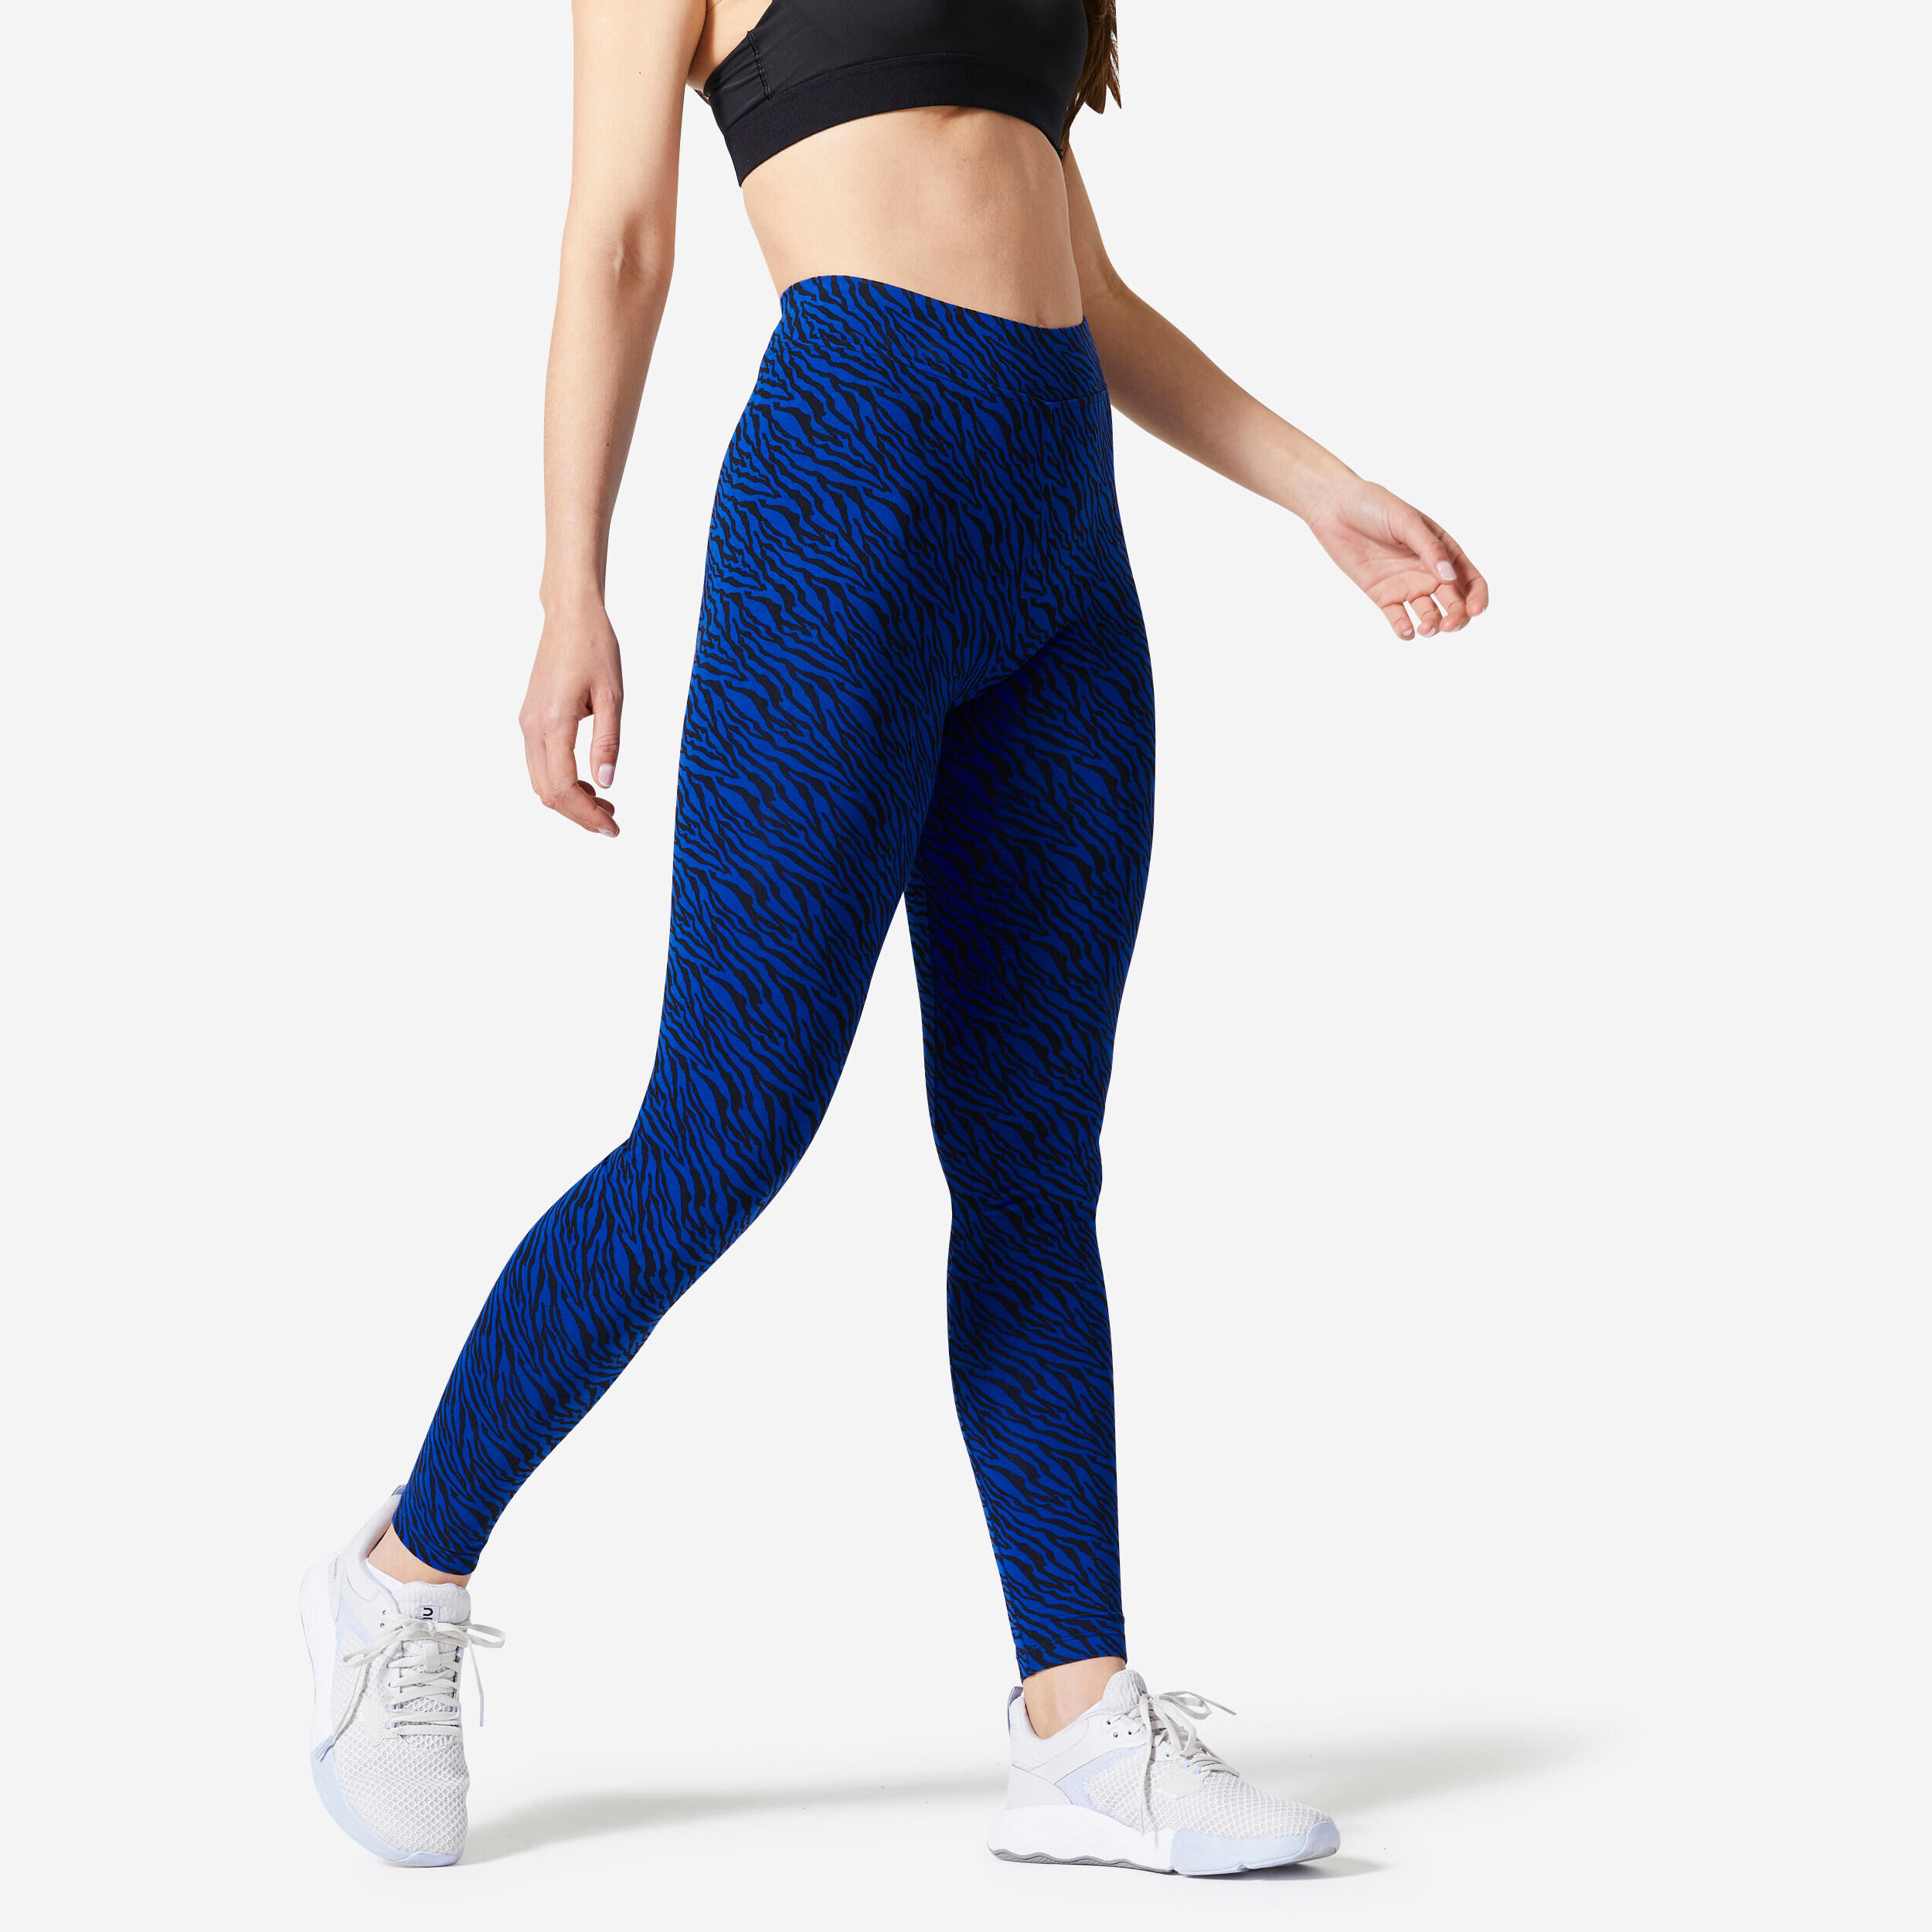 DOMYOS Women's Slim-Fit Fitness Leggings Fit+ 500 - Blue and Black Print